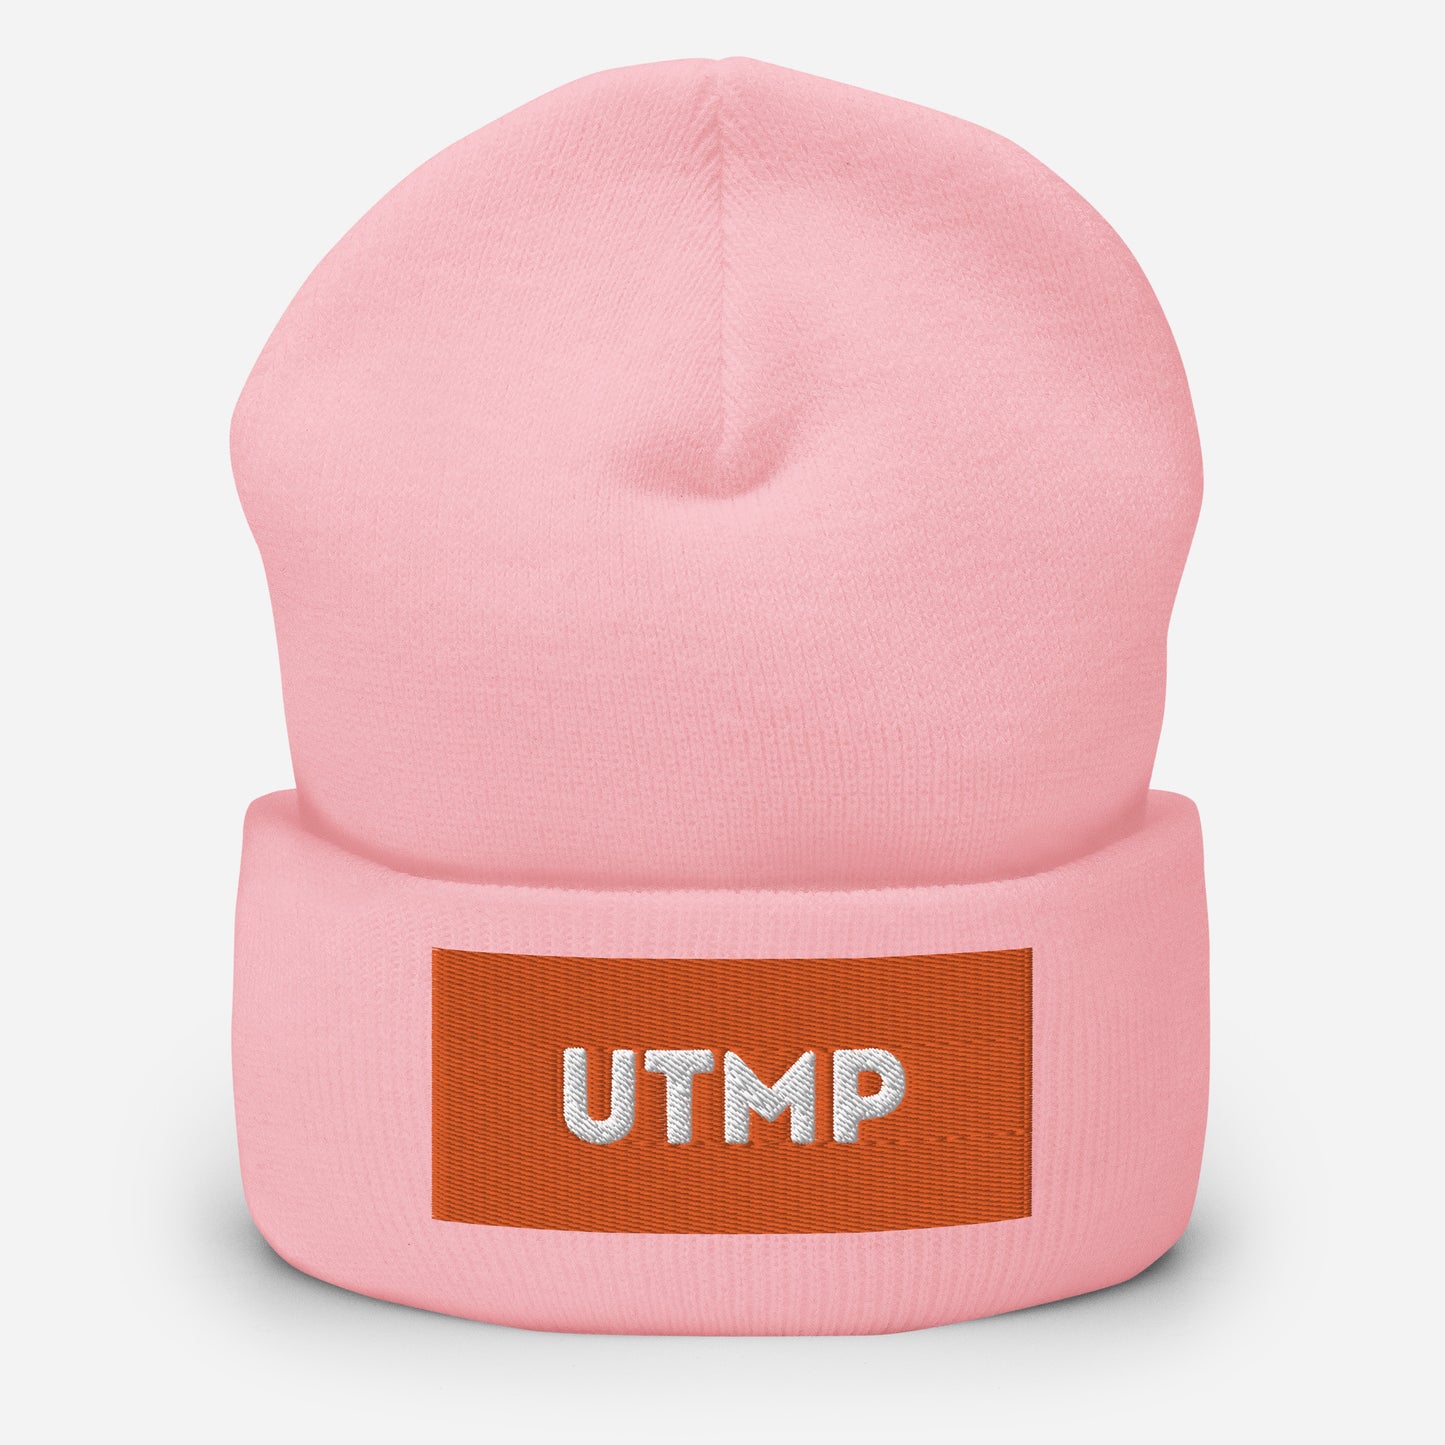 UTMP Cuffed Beanie Hat